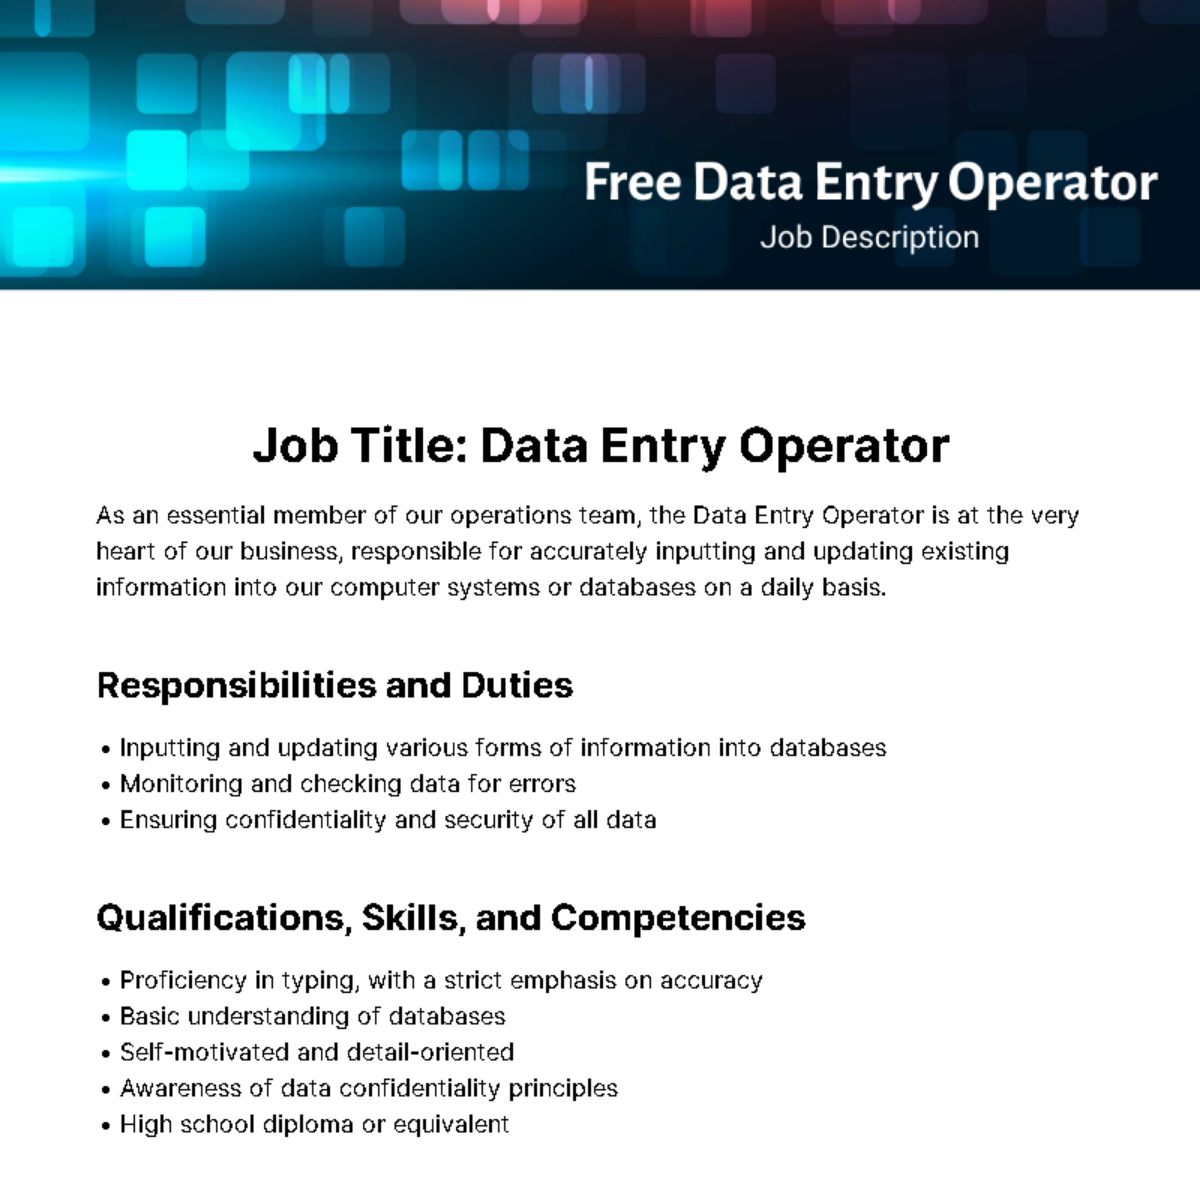 Free Data Entry Operator Job Description Template